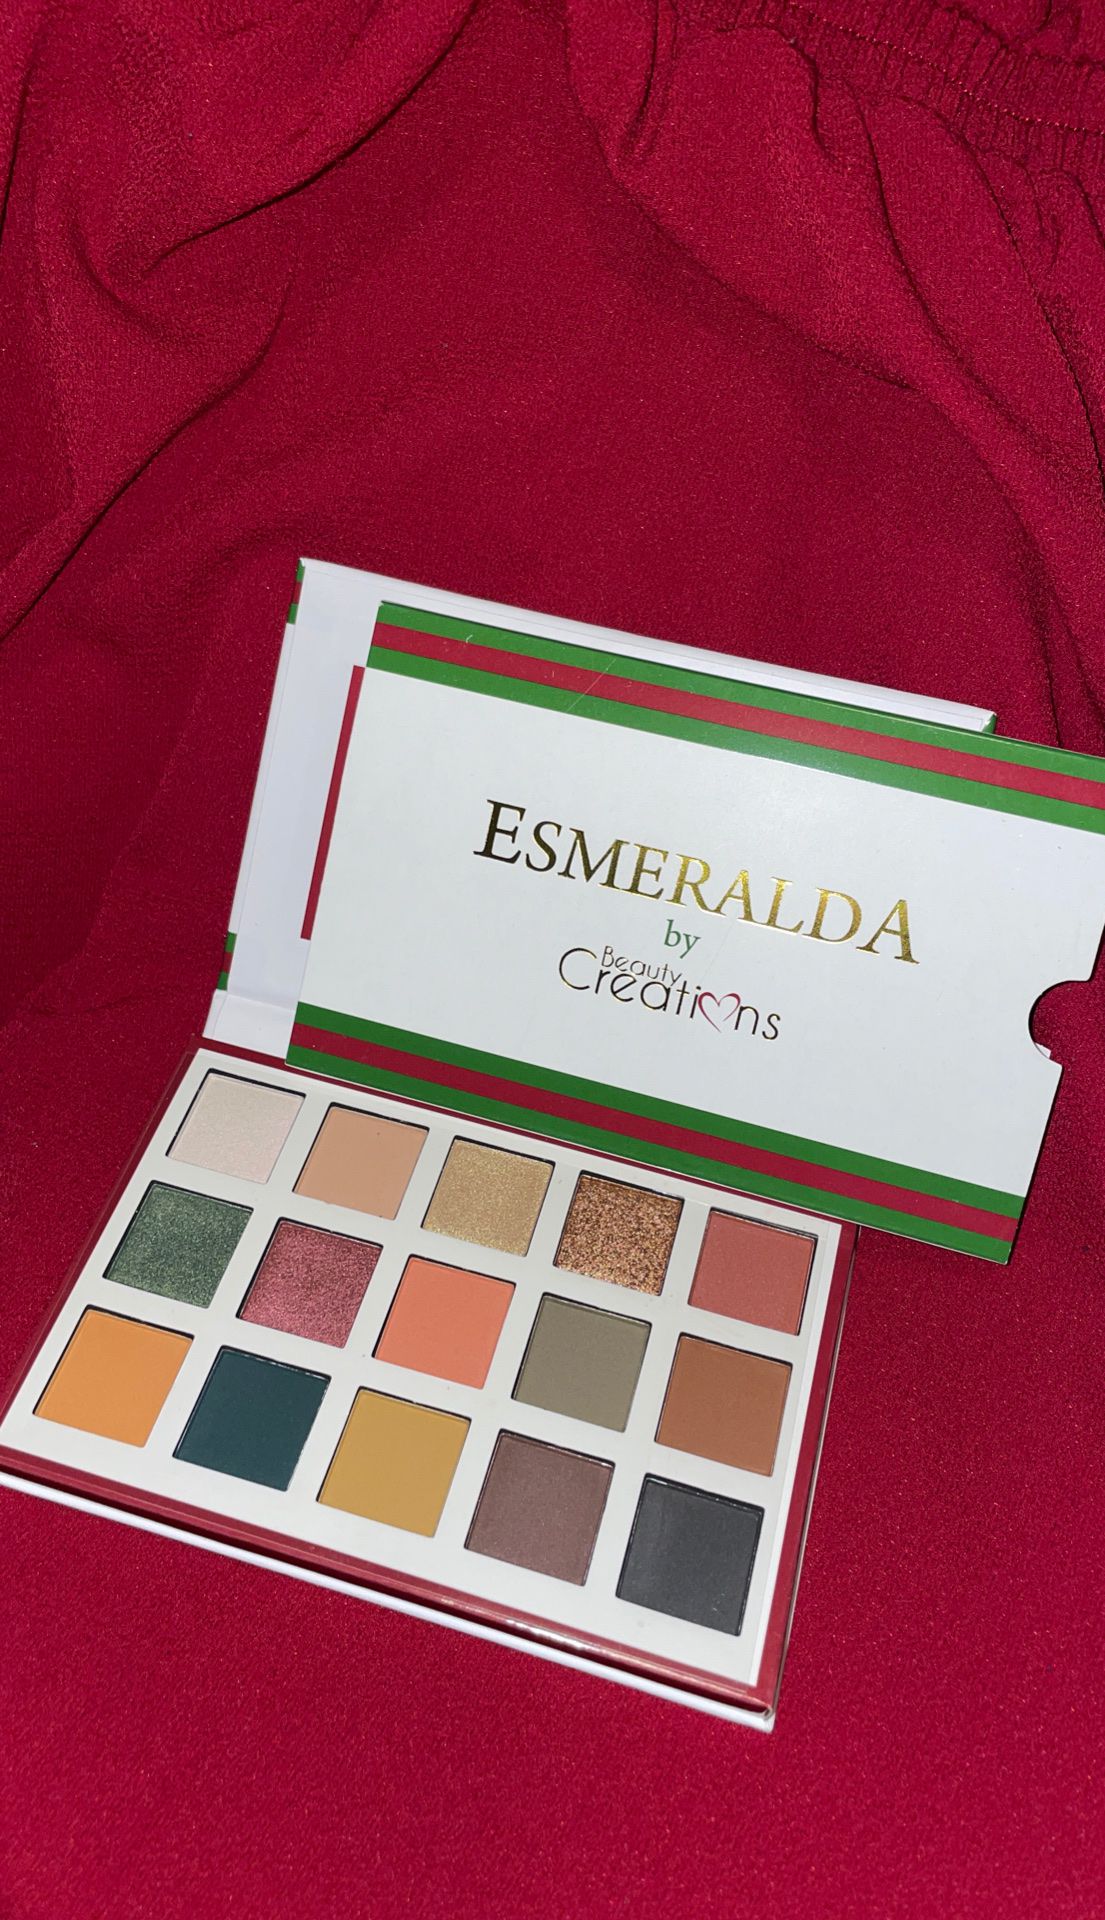 Brand New, Never Used- Esmeralda 1 eyeshadow palette